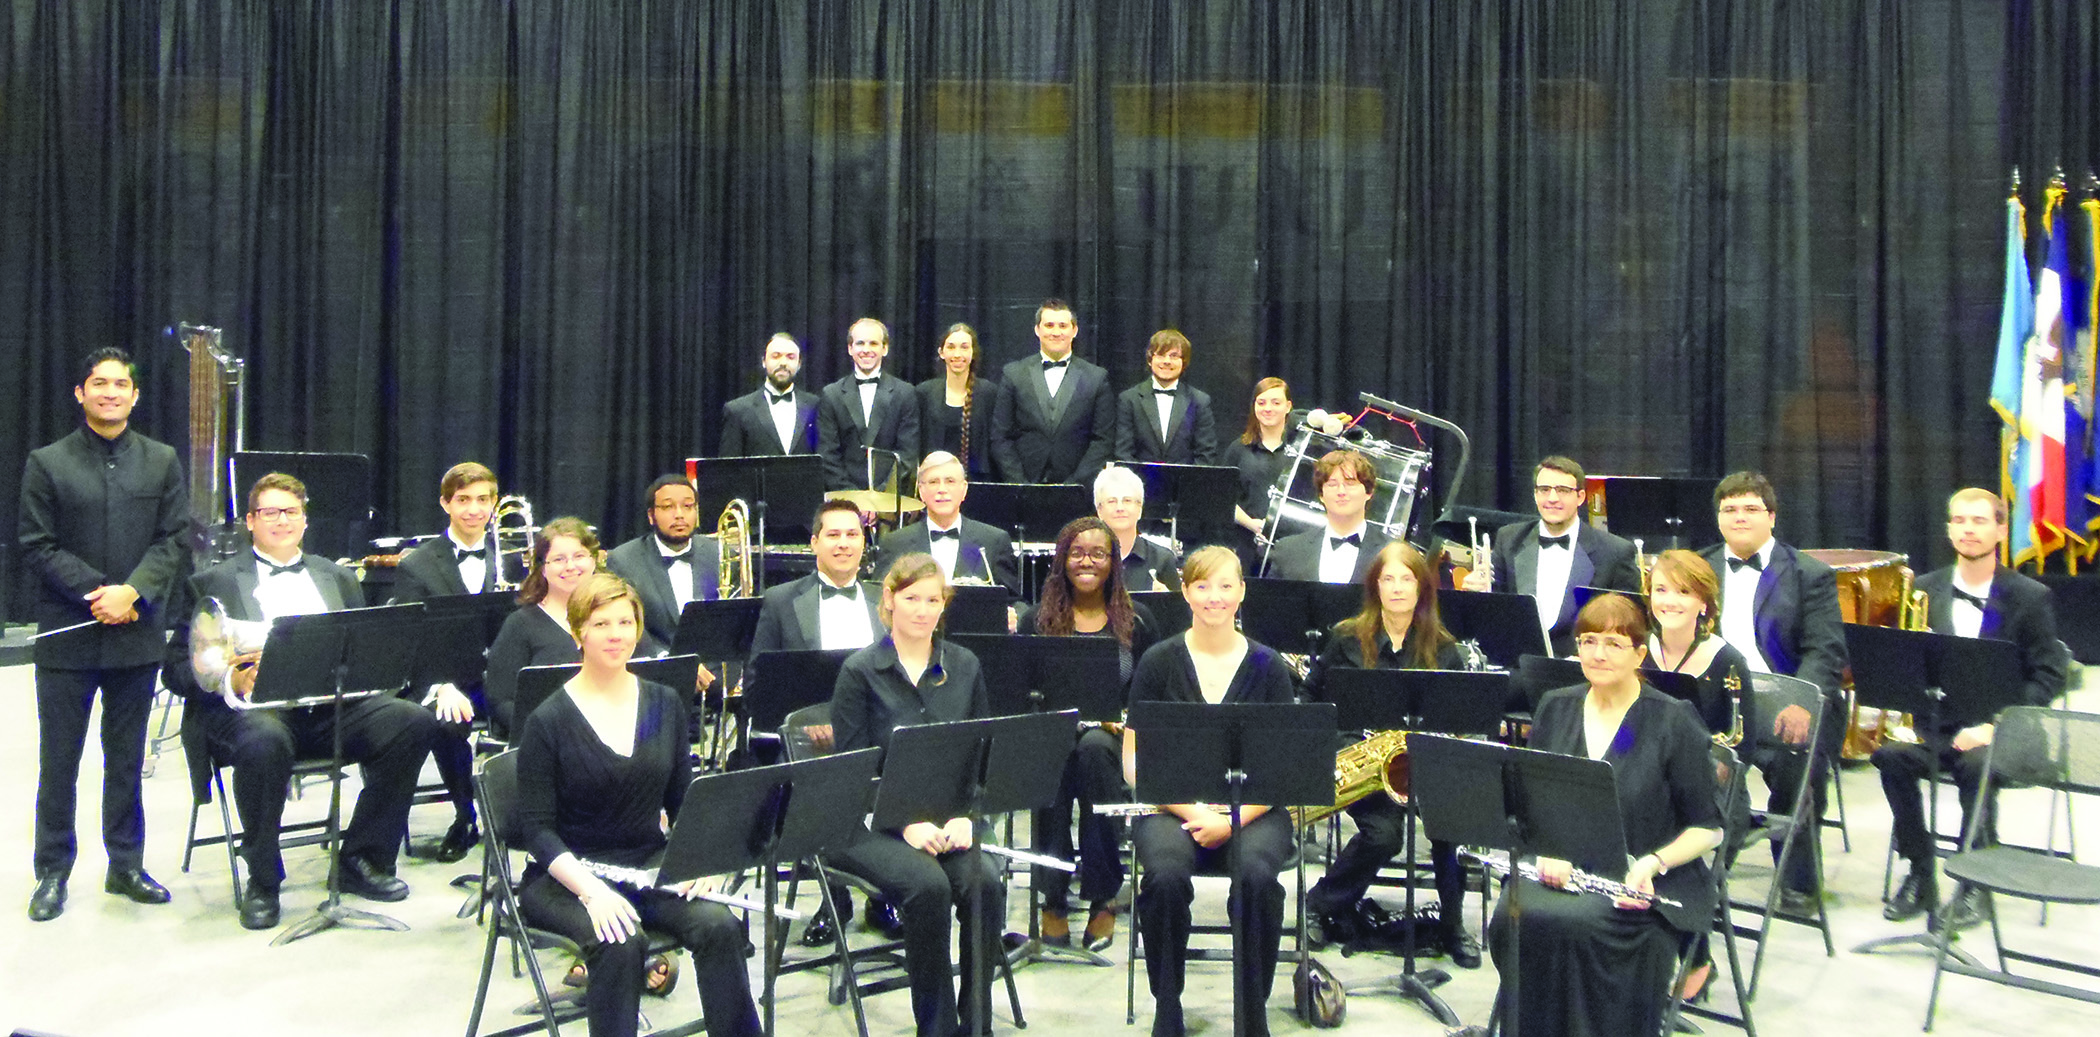 Cameron Students selected to Oklahoma Intercollegiate Honor Band